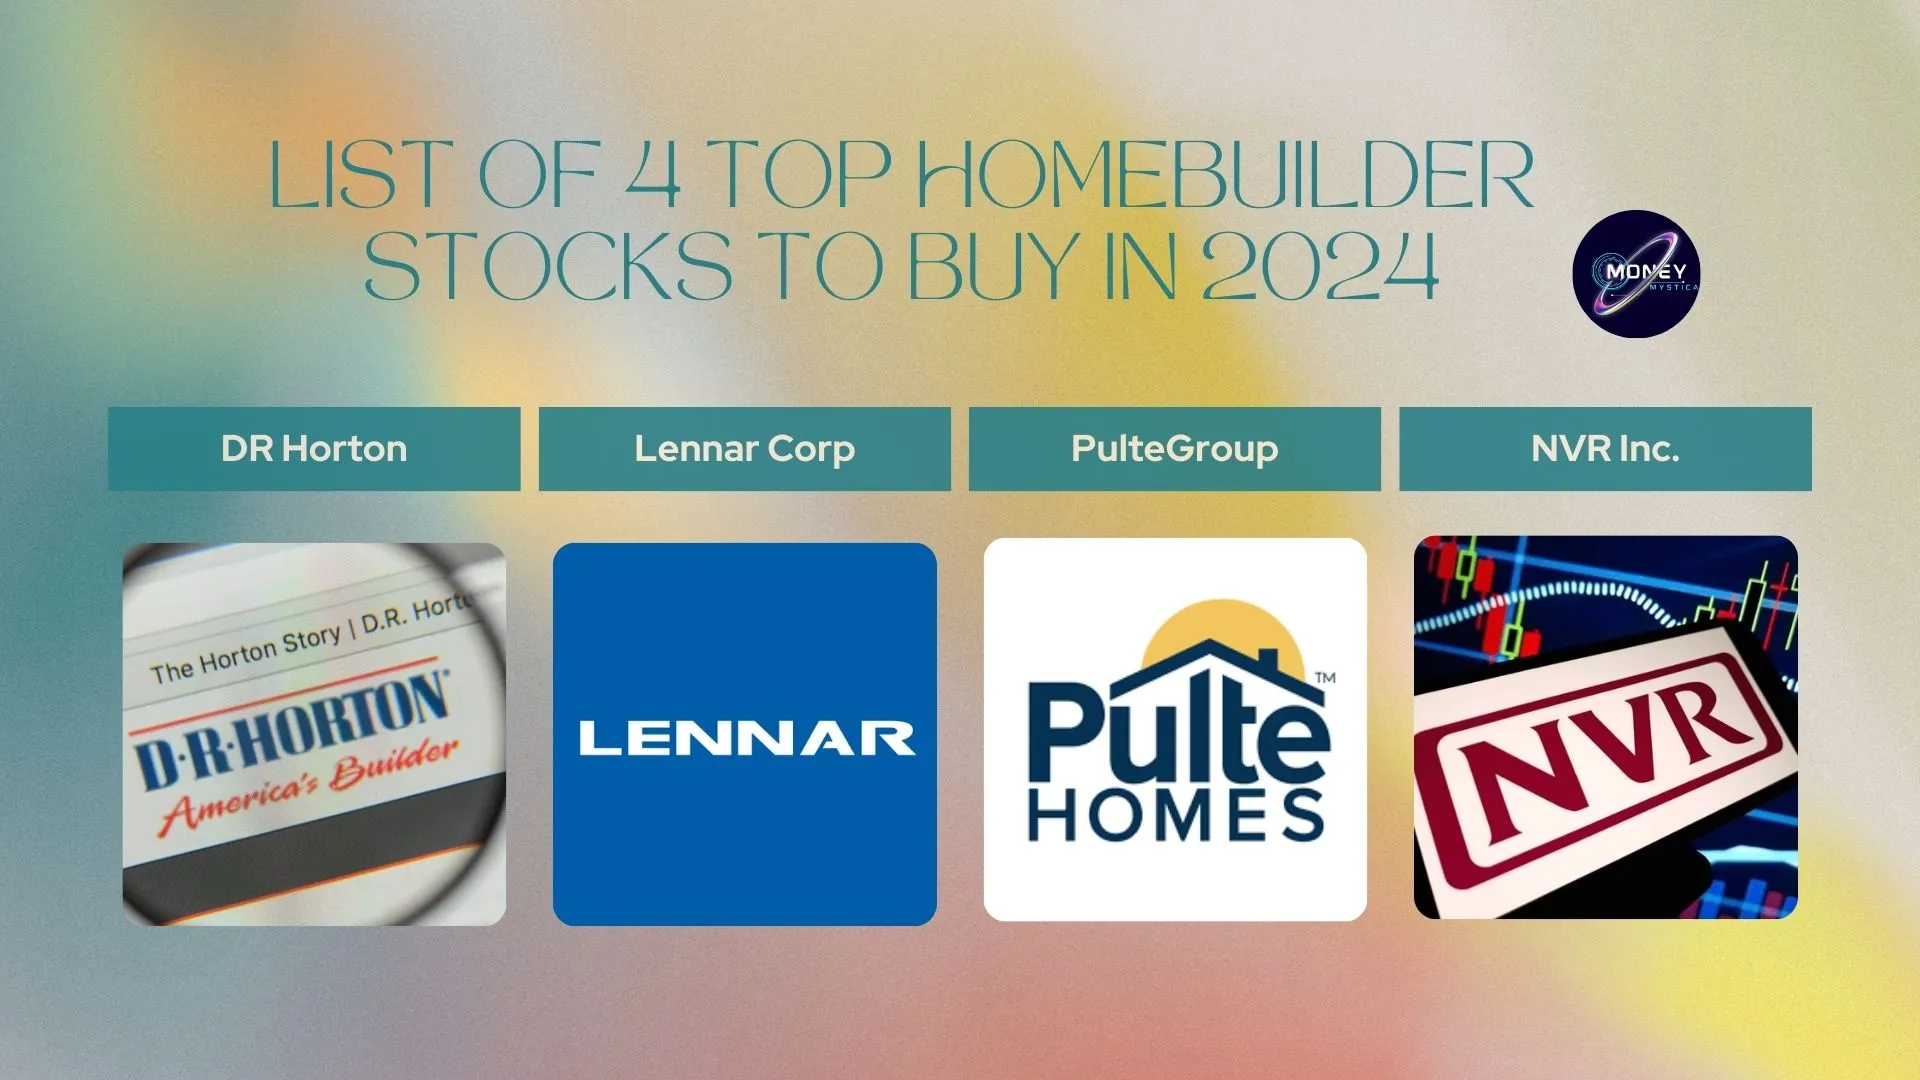 List of 4 Top Homebuilder Stocks To Buy in 2024